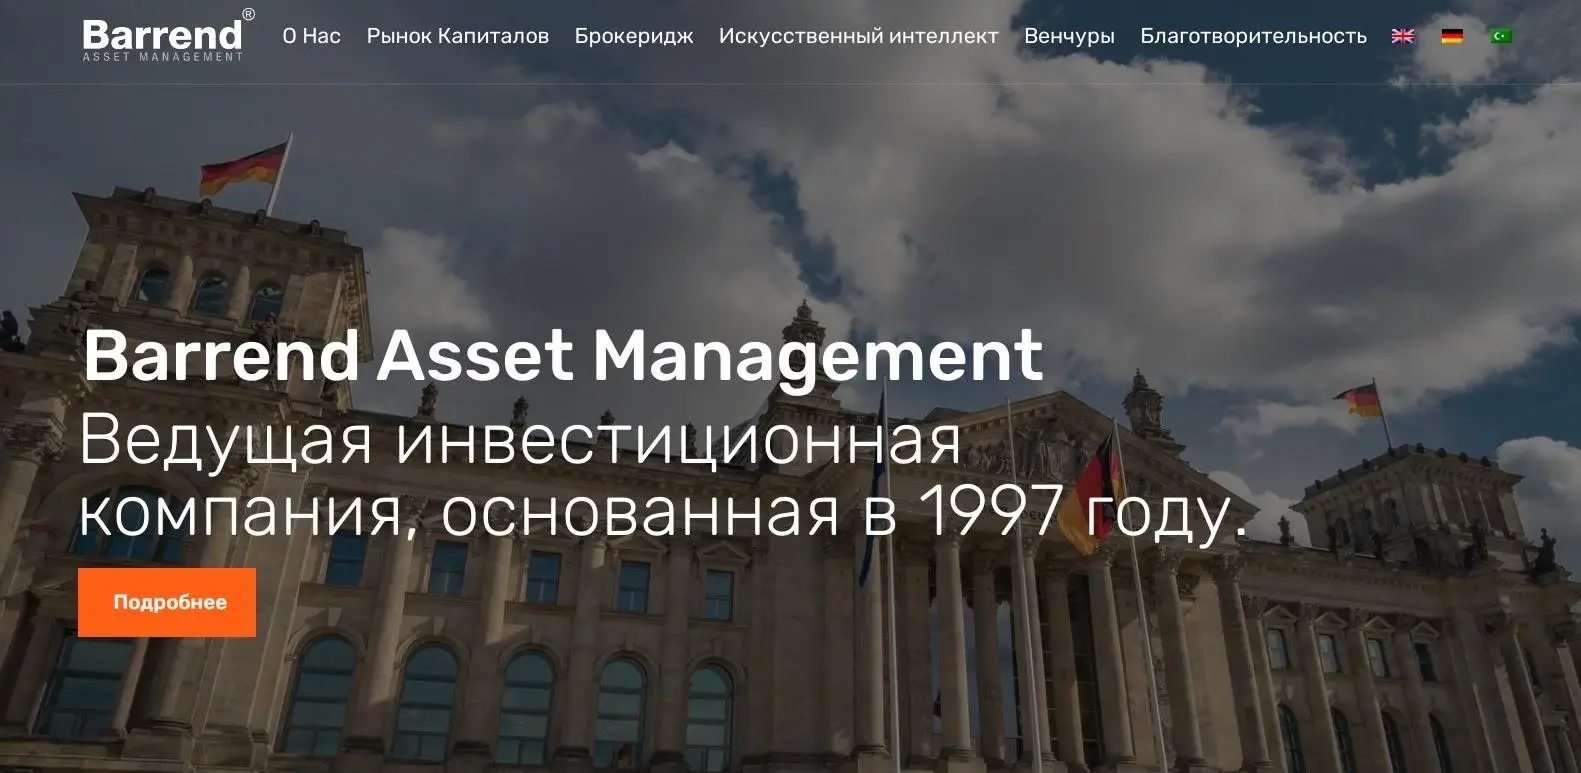 Barrend Asset Management 